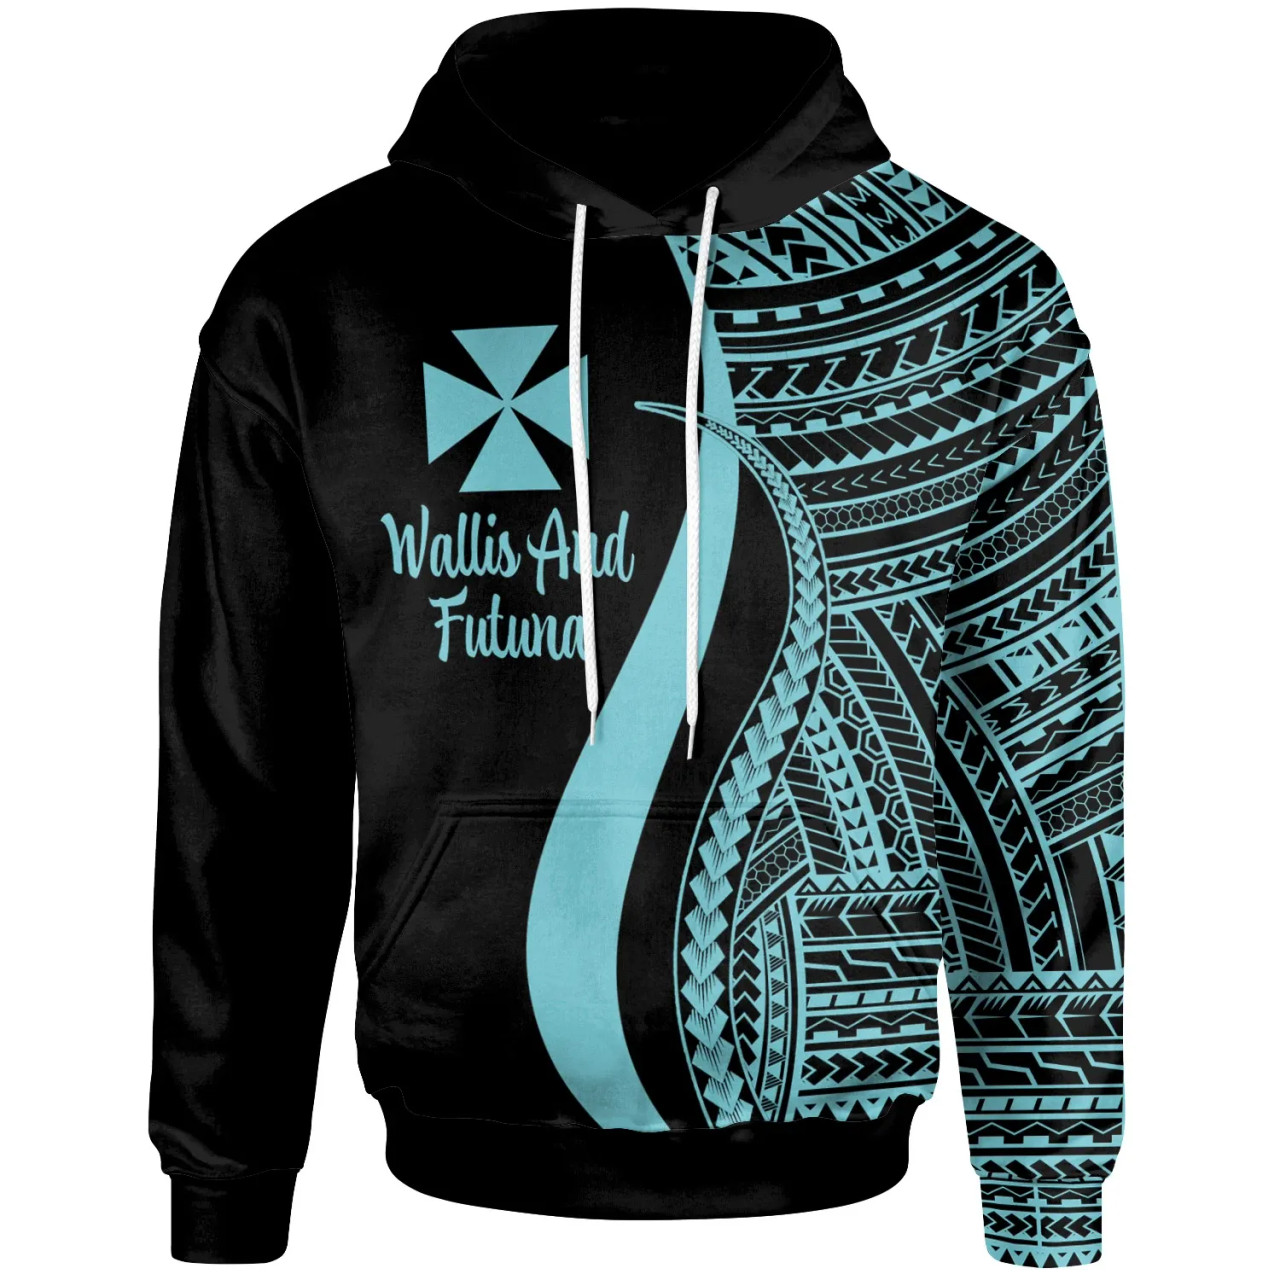 Wallis and Futuna Hoodie Turquoise - Tentacle Tribal Pattern